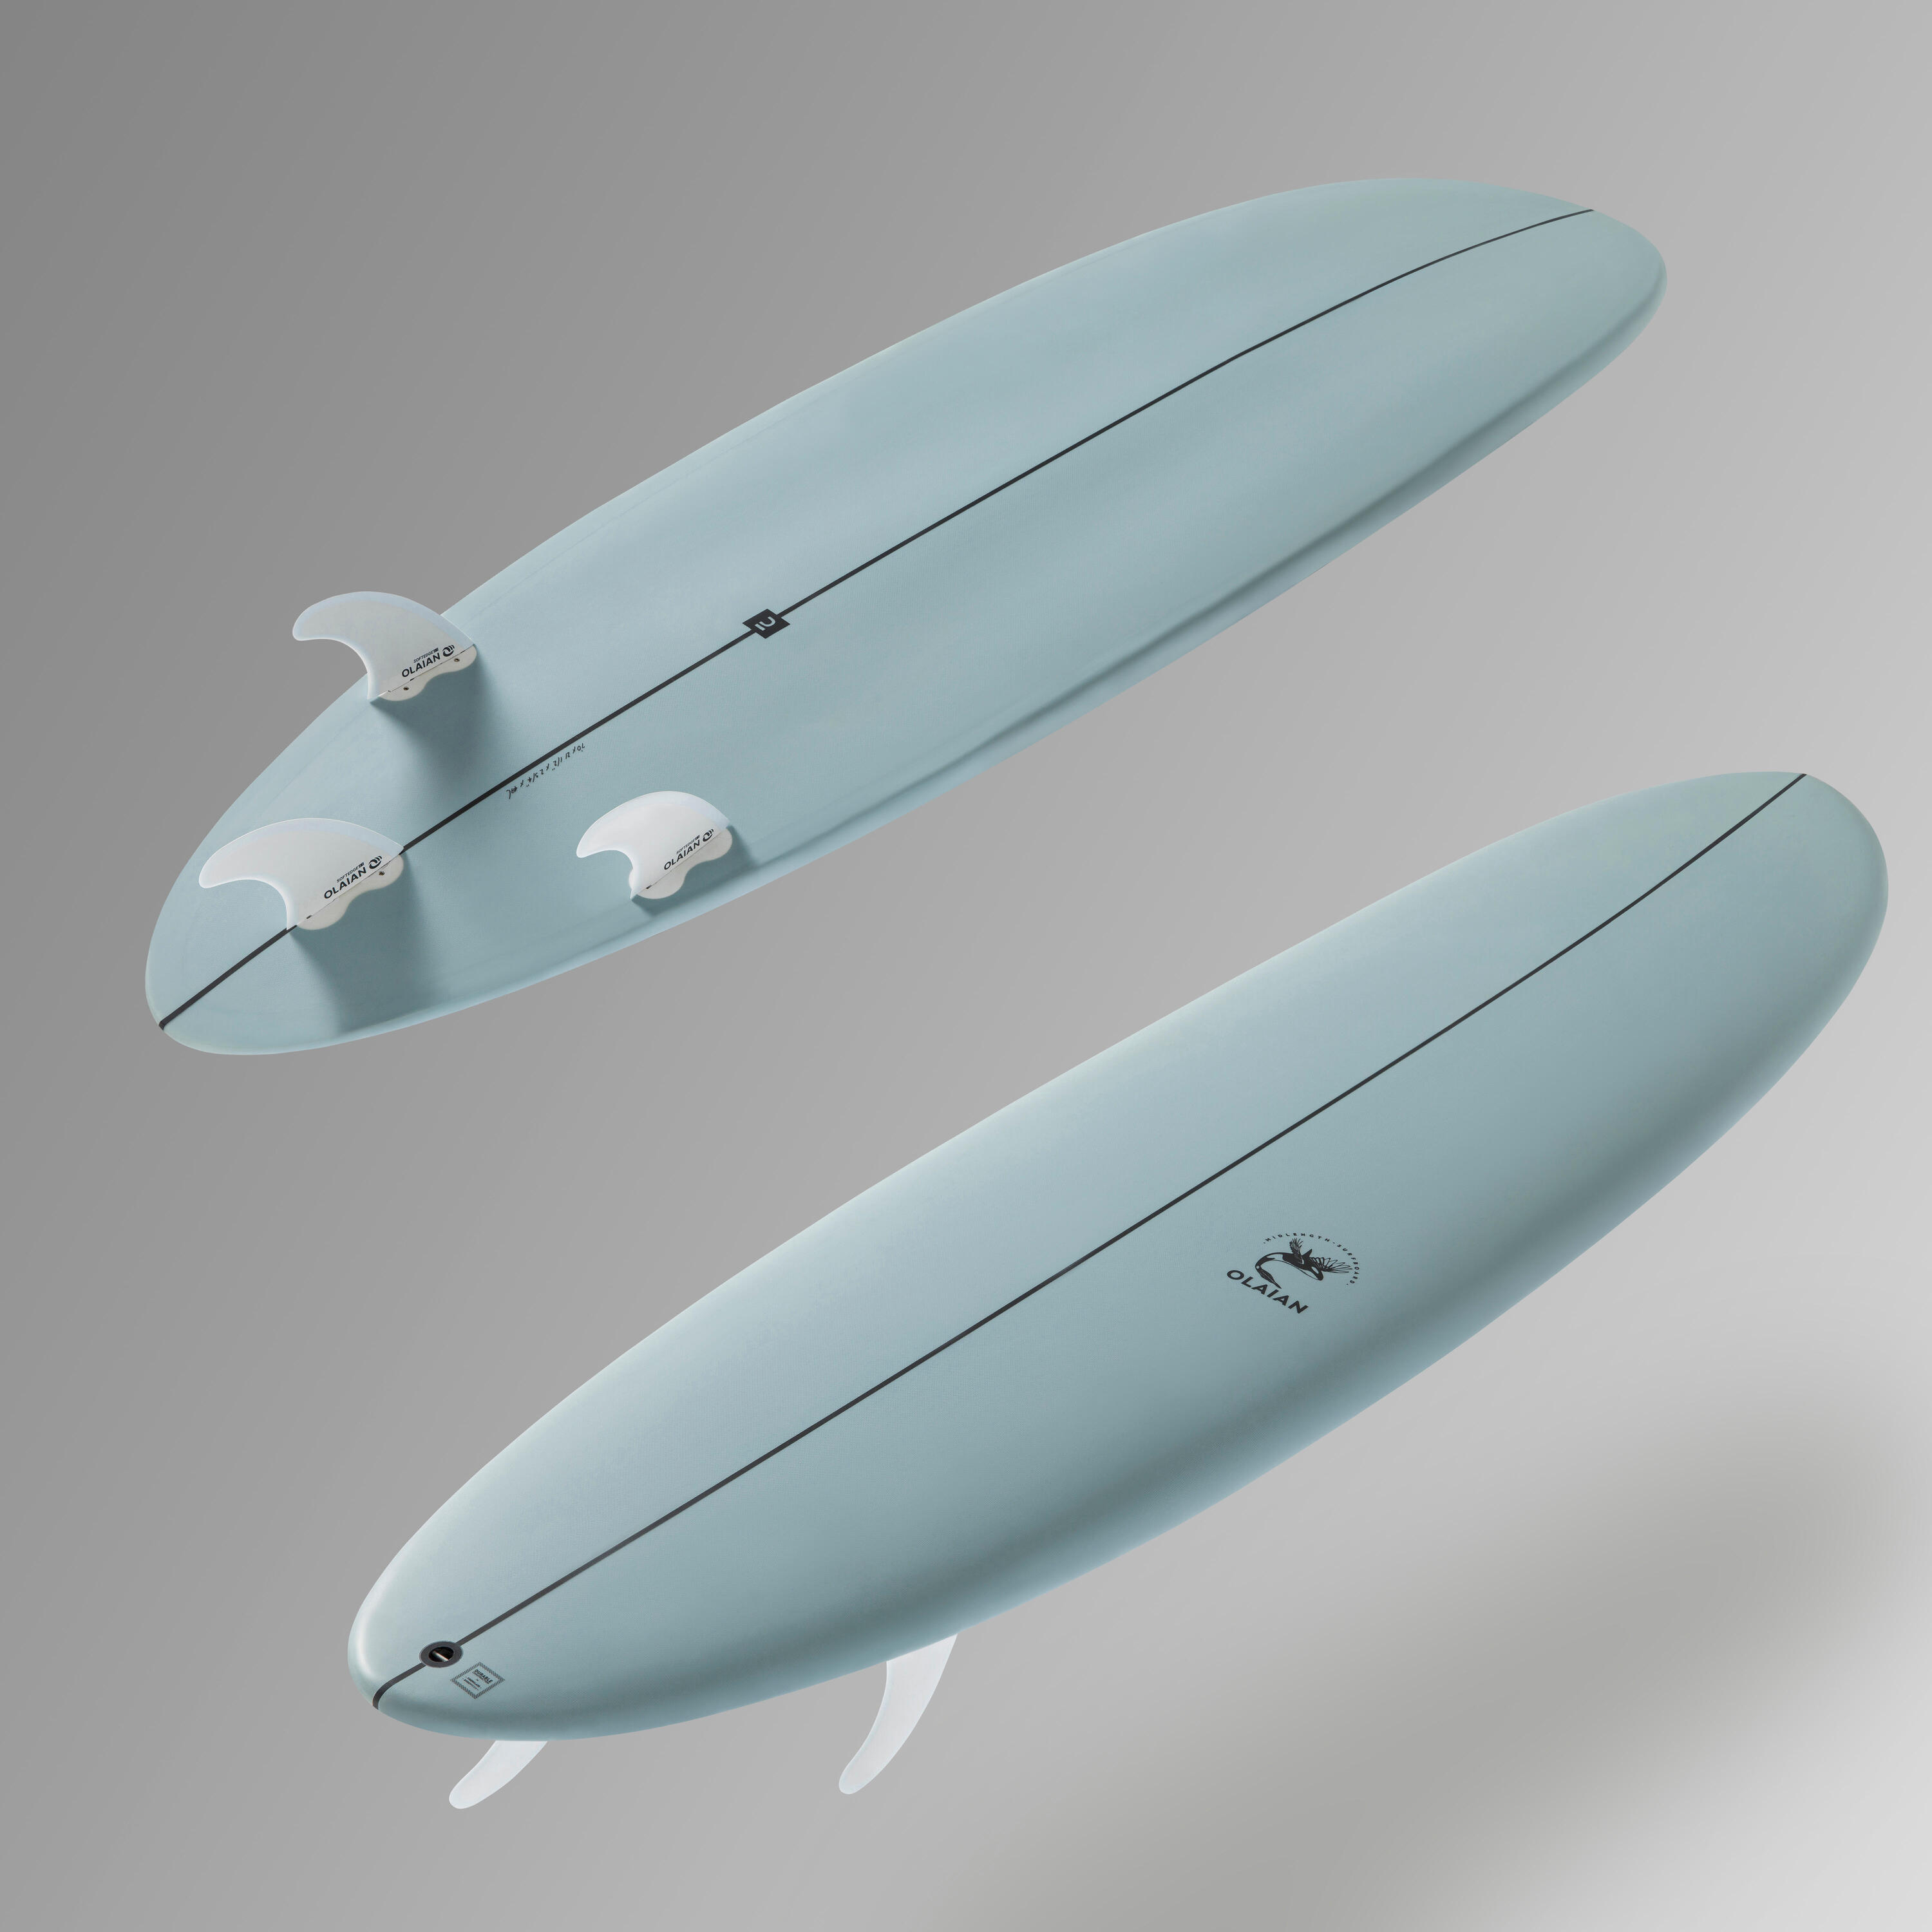 SURFBOARD 500 Hybrid 7' with three fins. 6/14